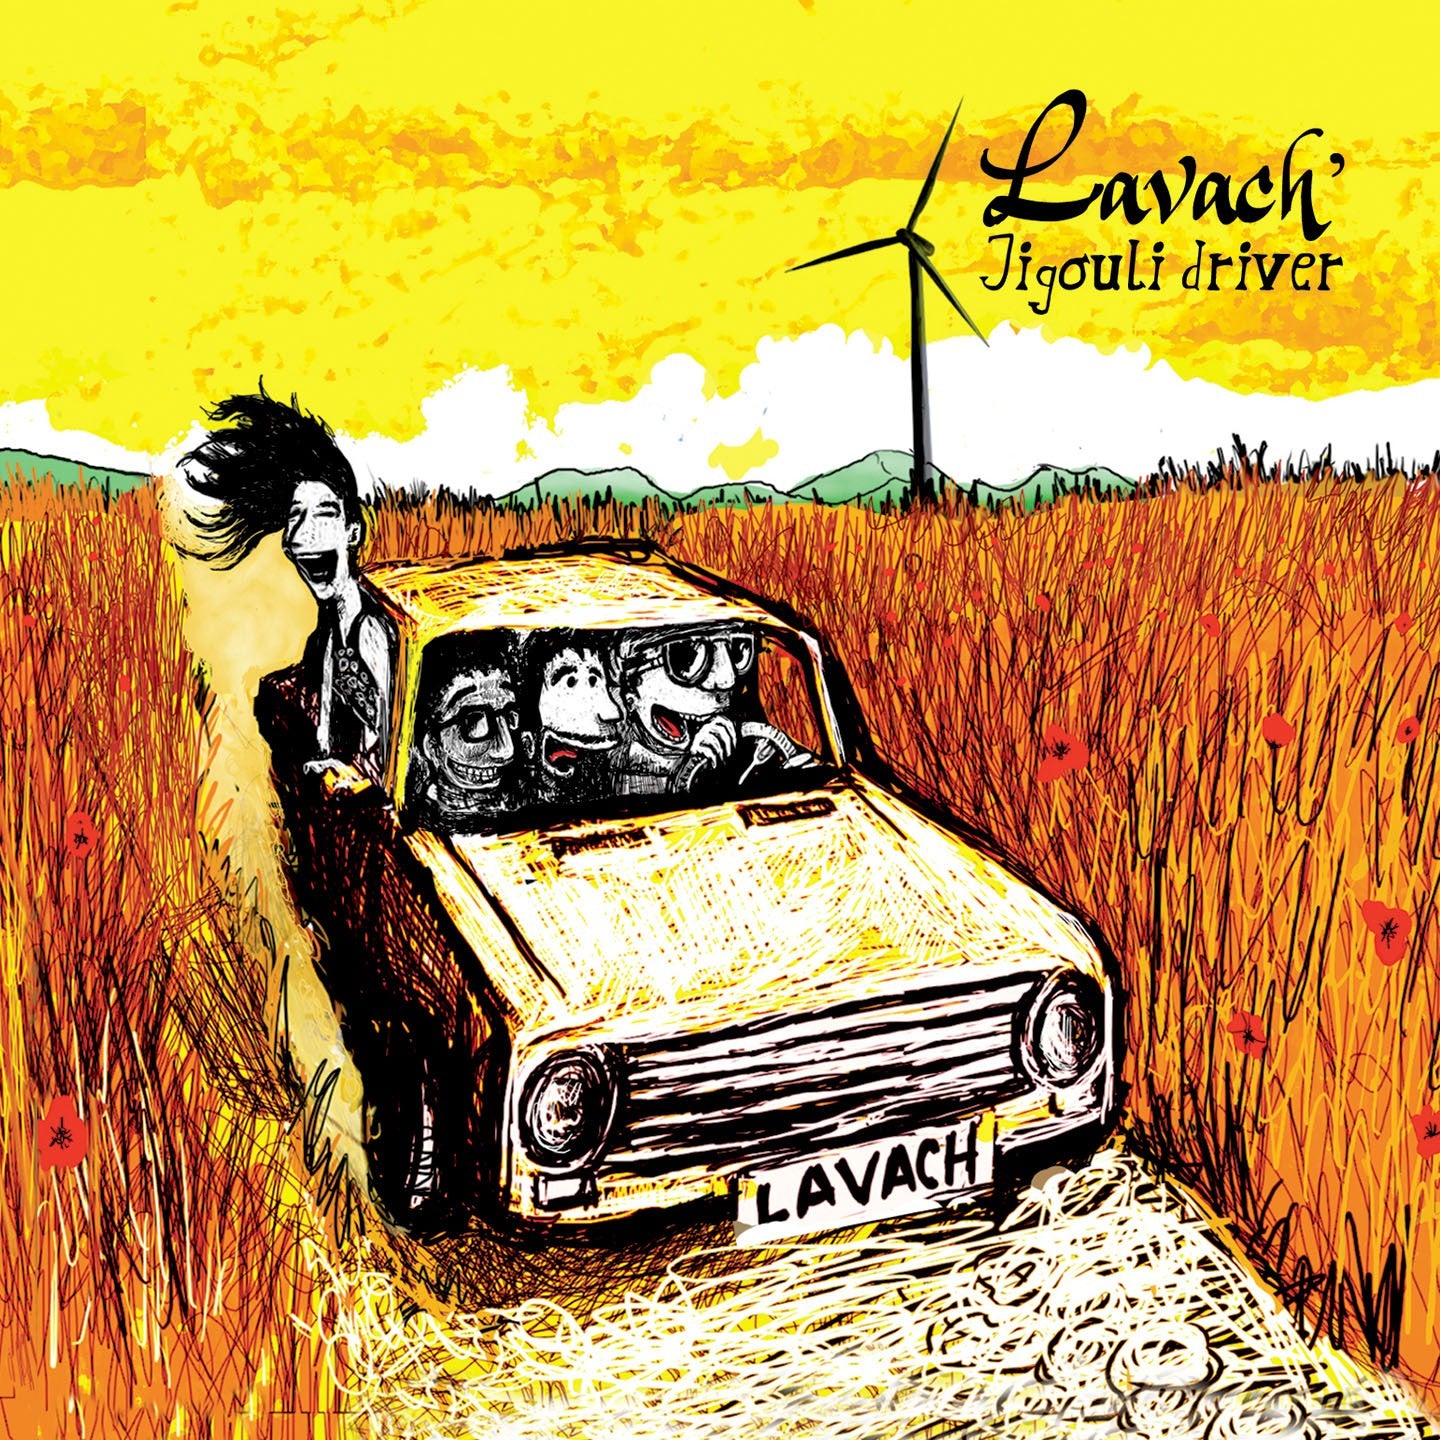 Pochette de : JIGOULI DRIVER - LAVACH  (CD)